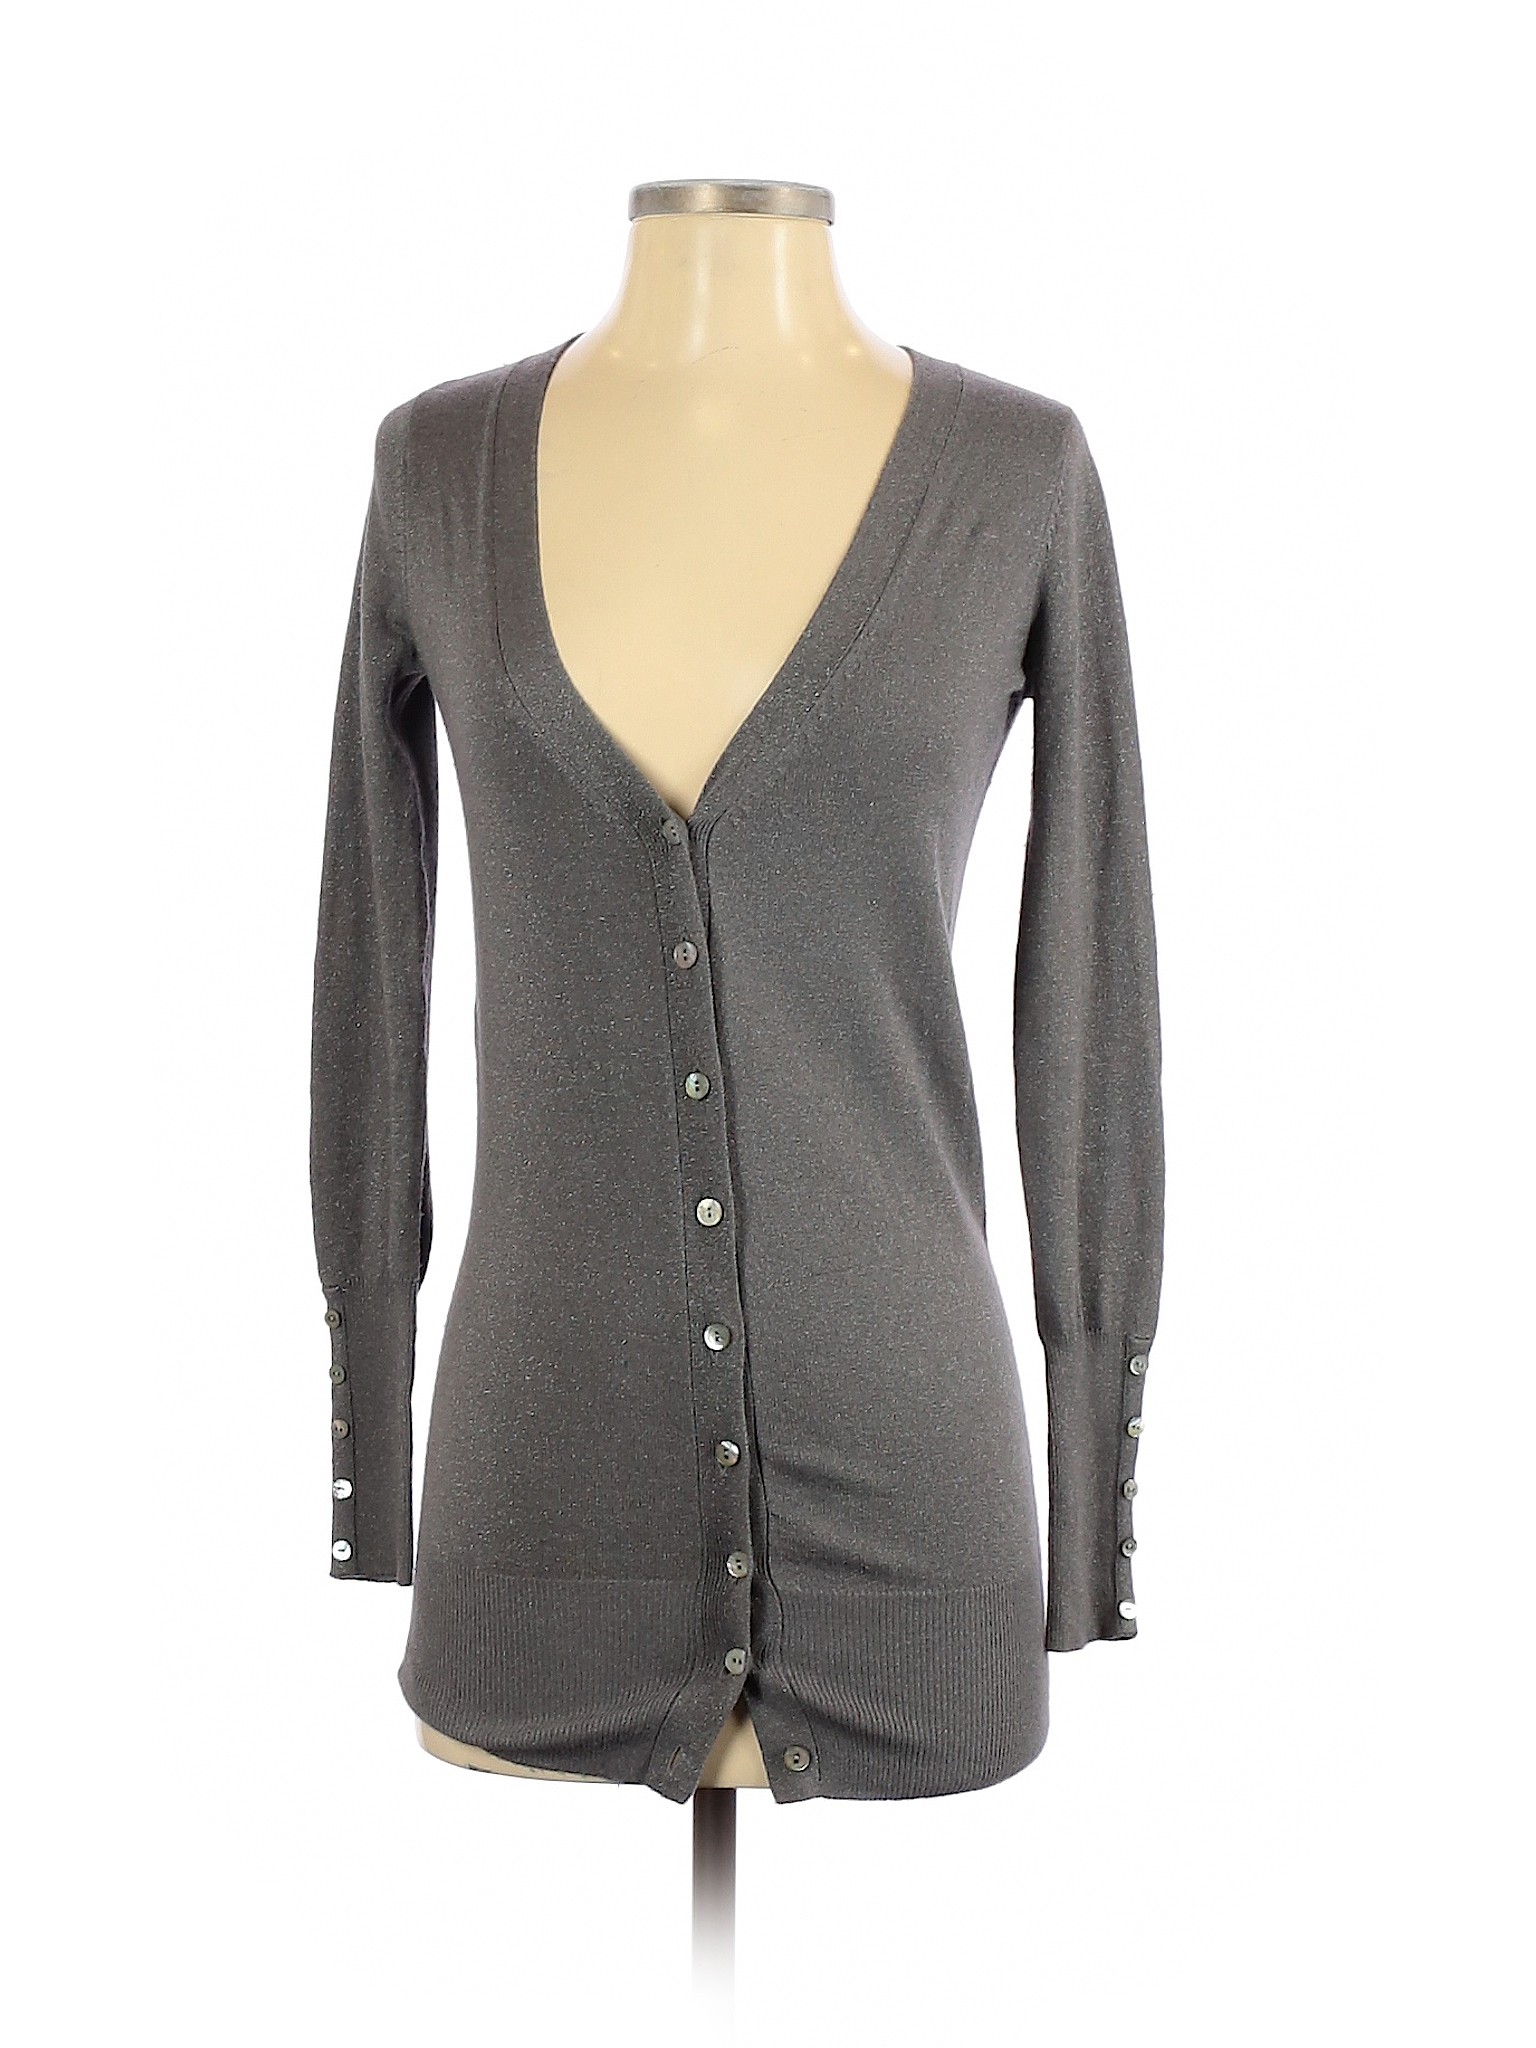 Zara Women Gray Cardigan S | eBay